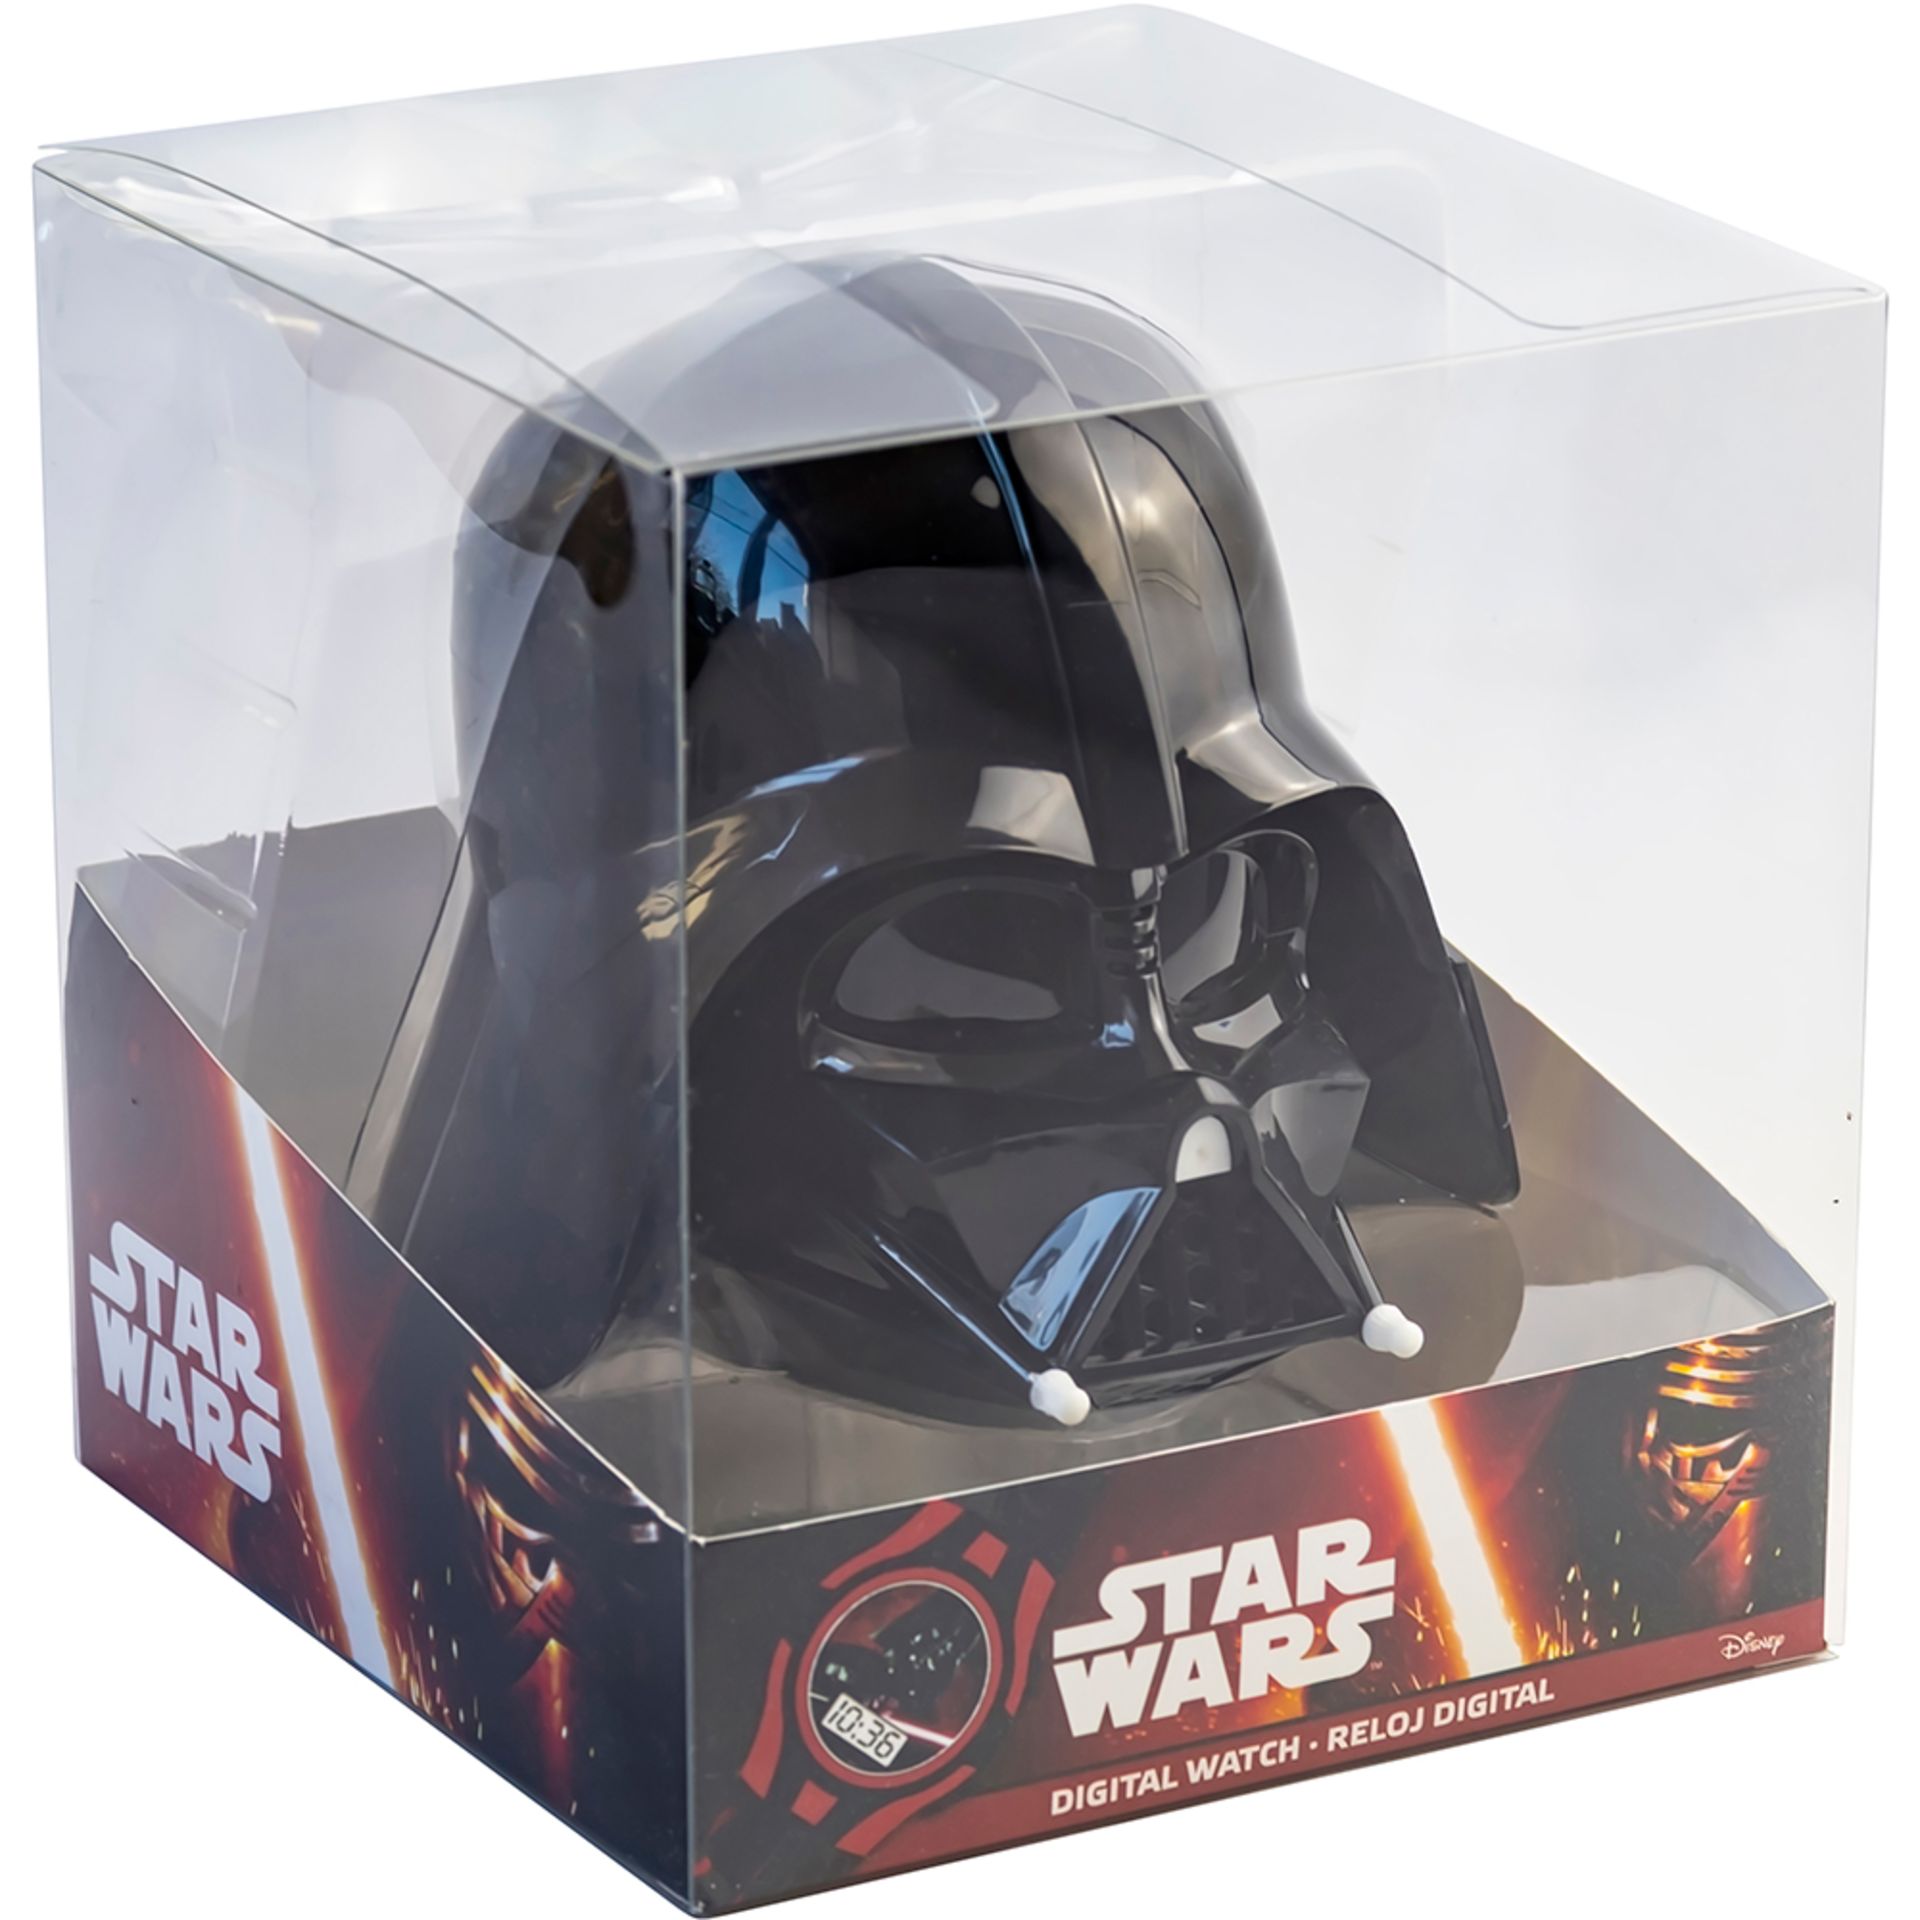 V Brand New Star Wars Darth Vader Watch In 3D Case - ISP £42.63 (Ebay)